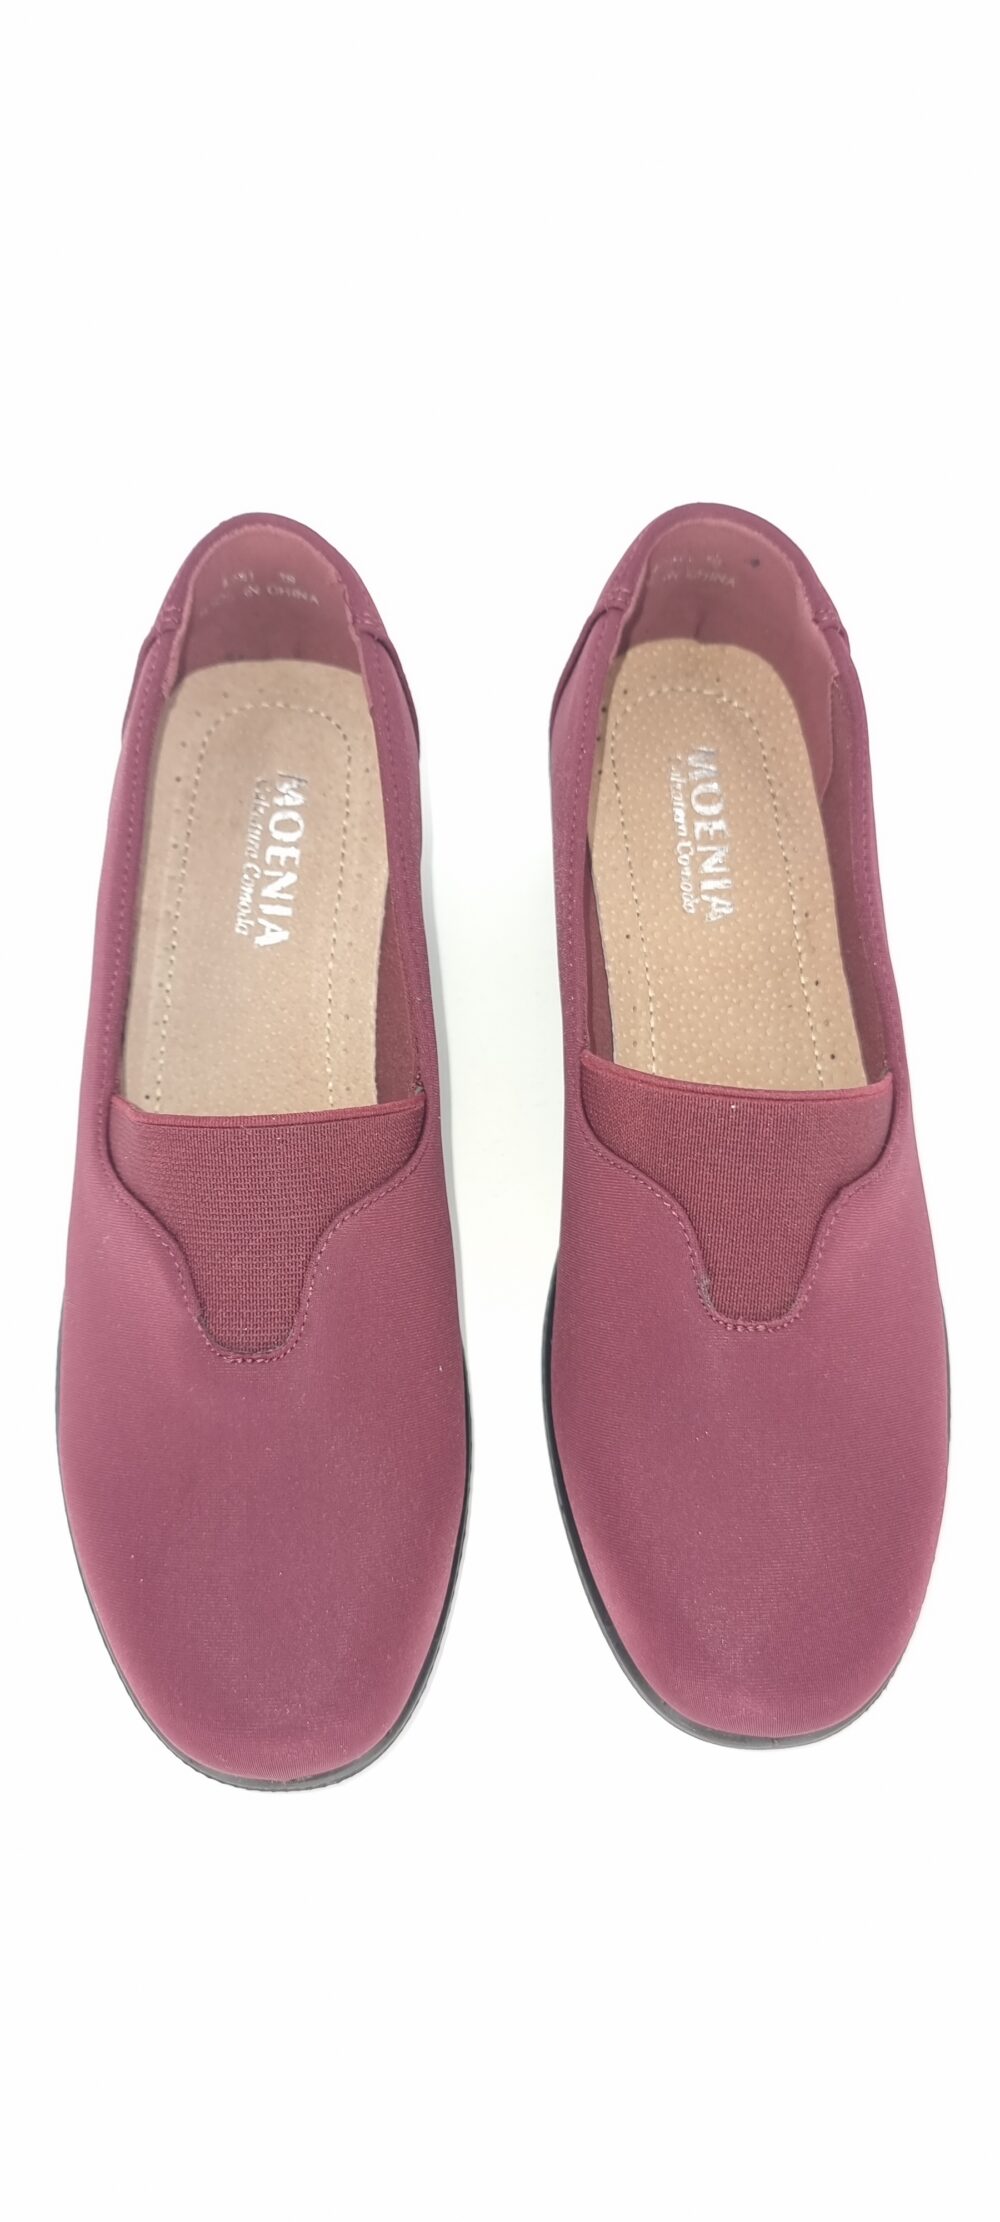 Shoe with low heel burgundy